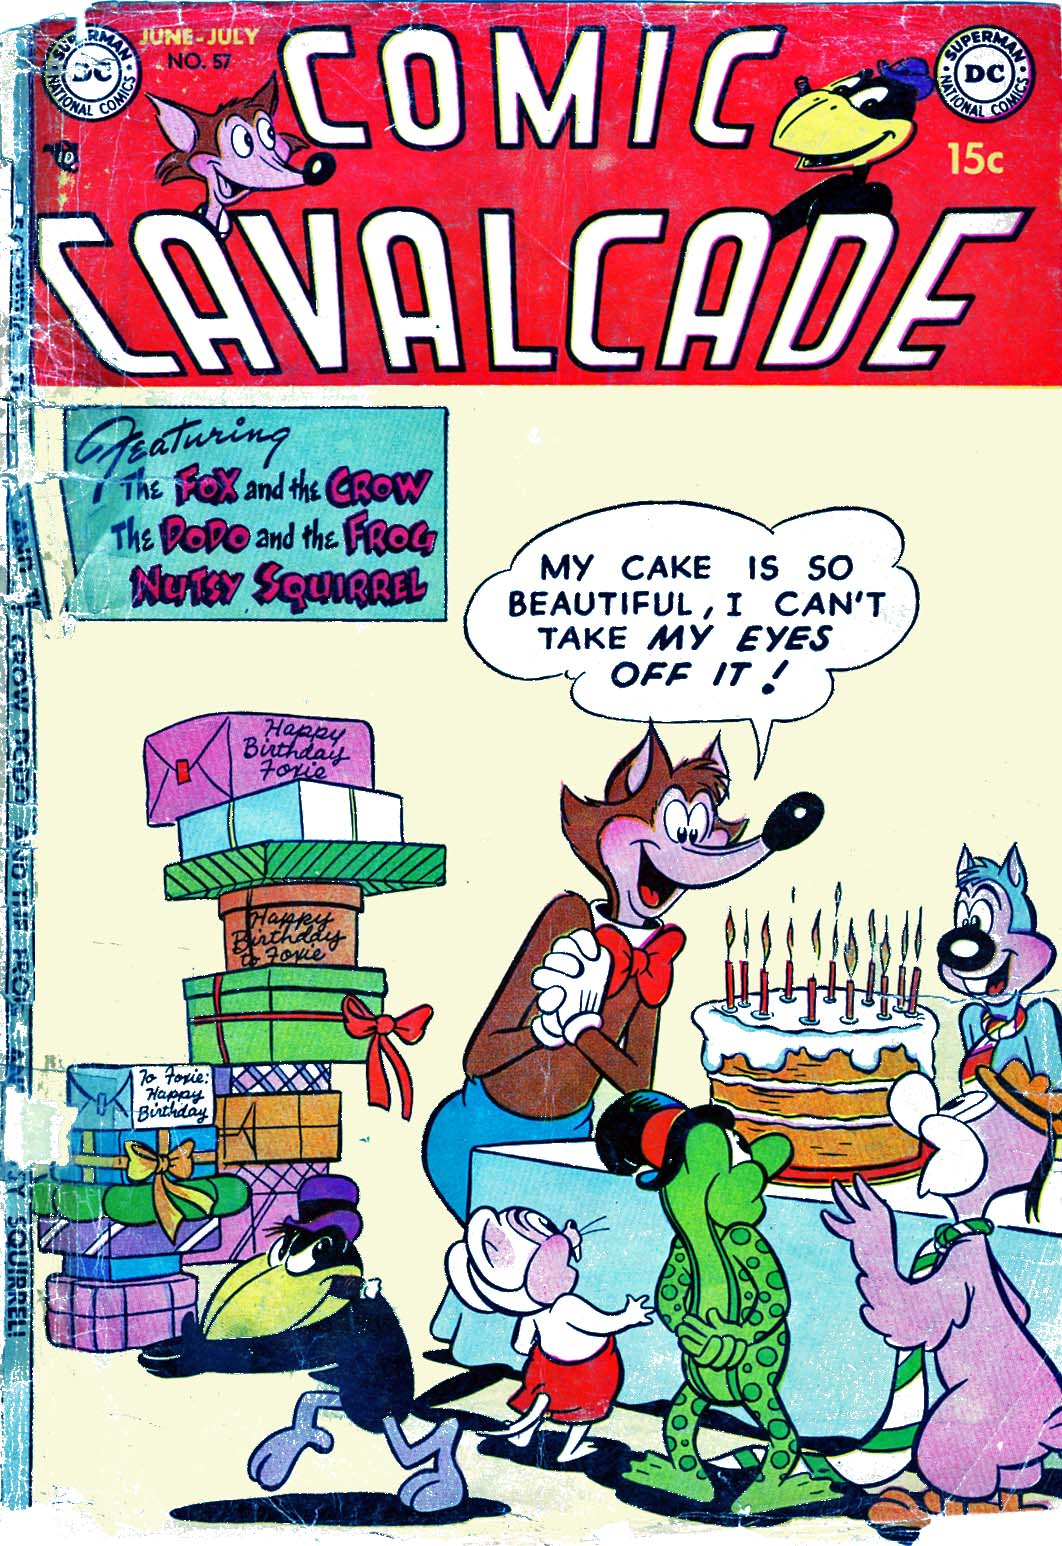 Comic Cavalcade issue 57 - Page 1